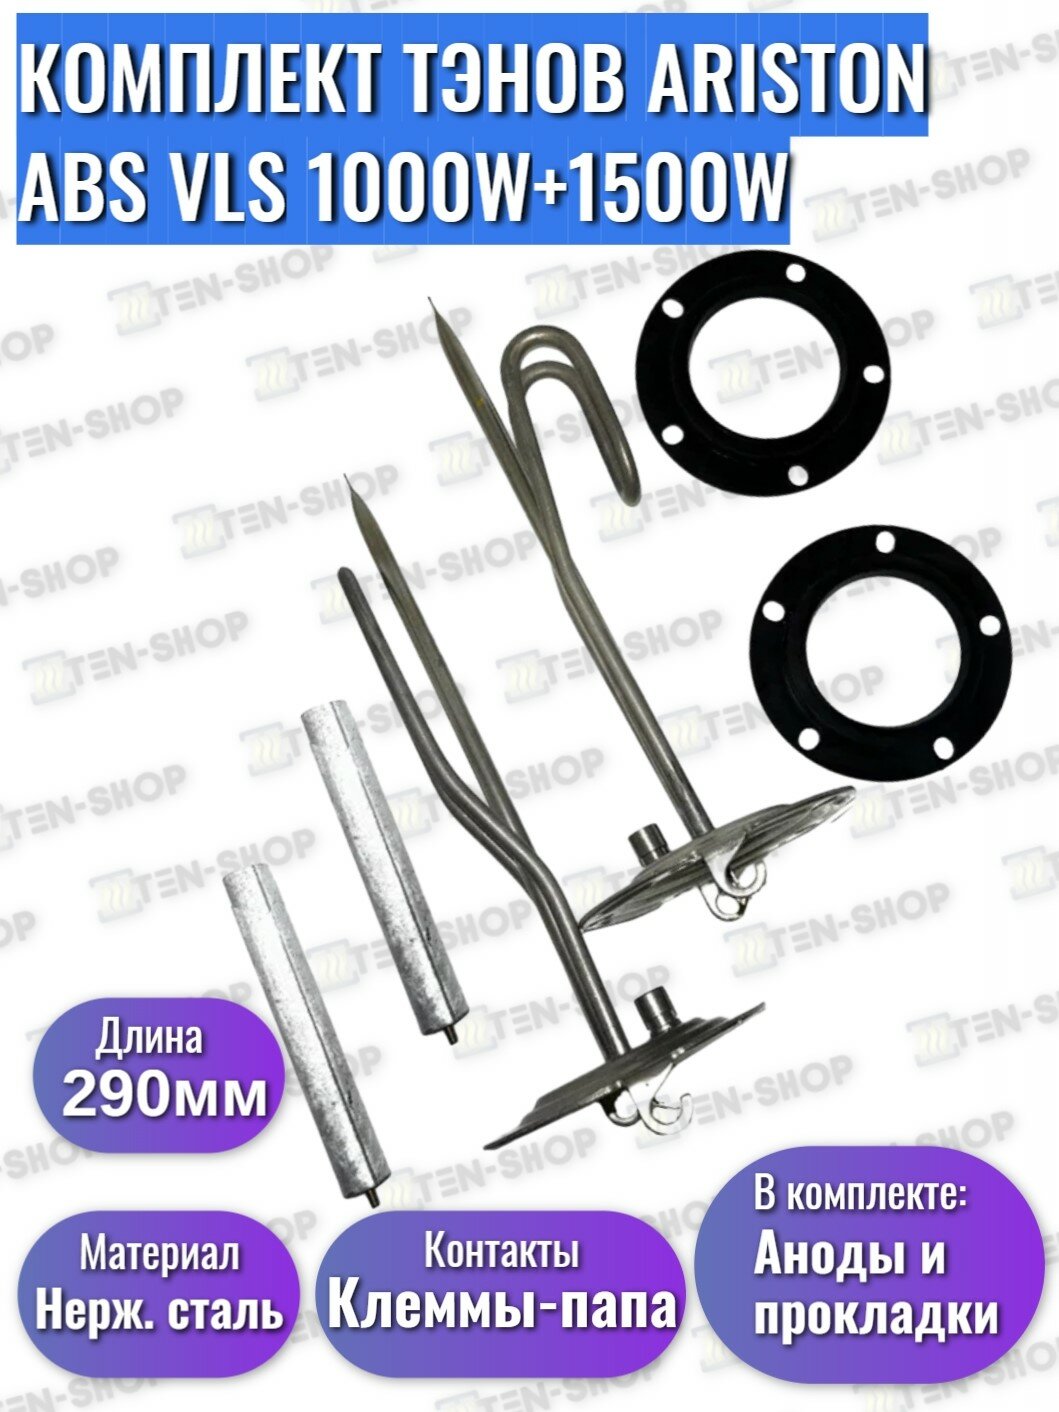 Комплект ТЭНов Ariston ABS VLS 1000W + 1500W + Магниевые Аноды + Прокладки